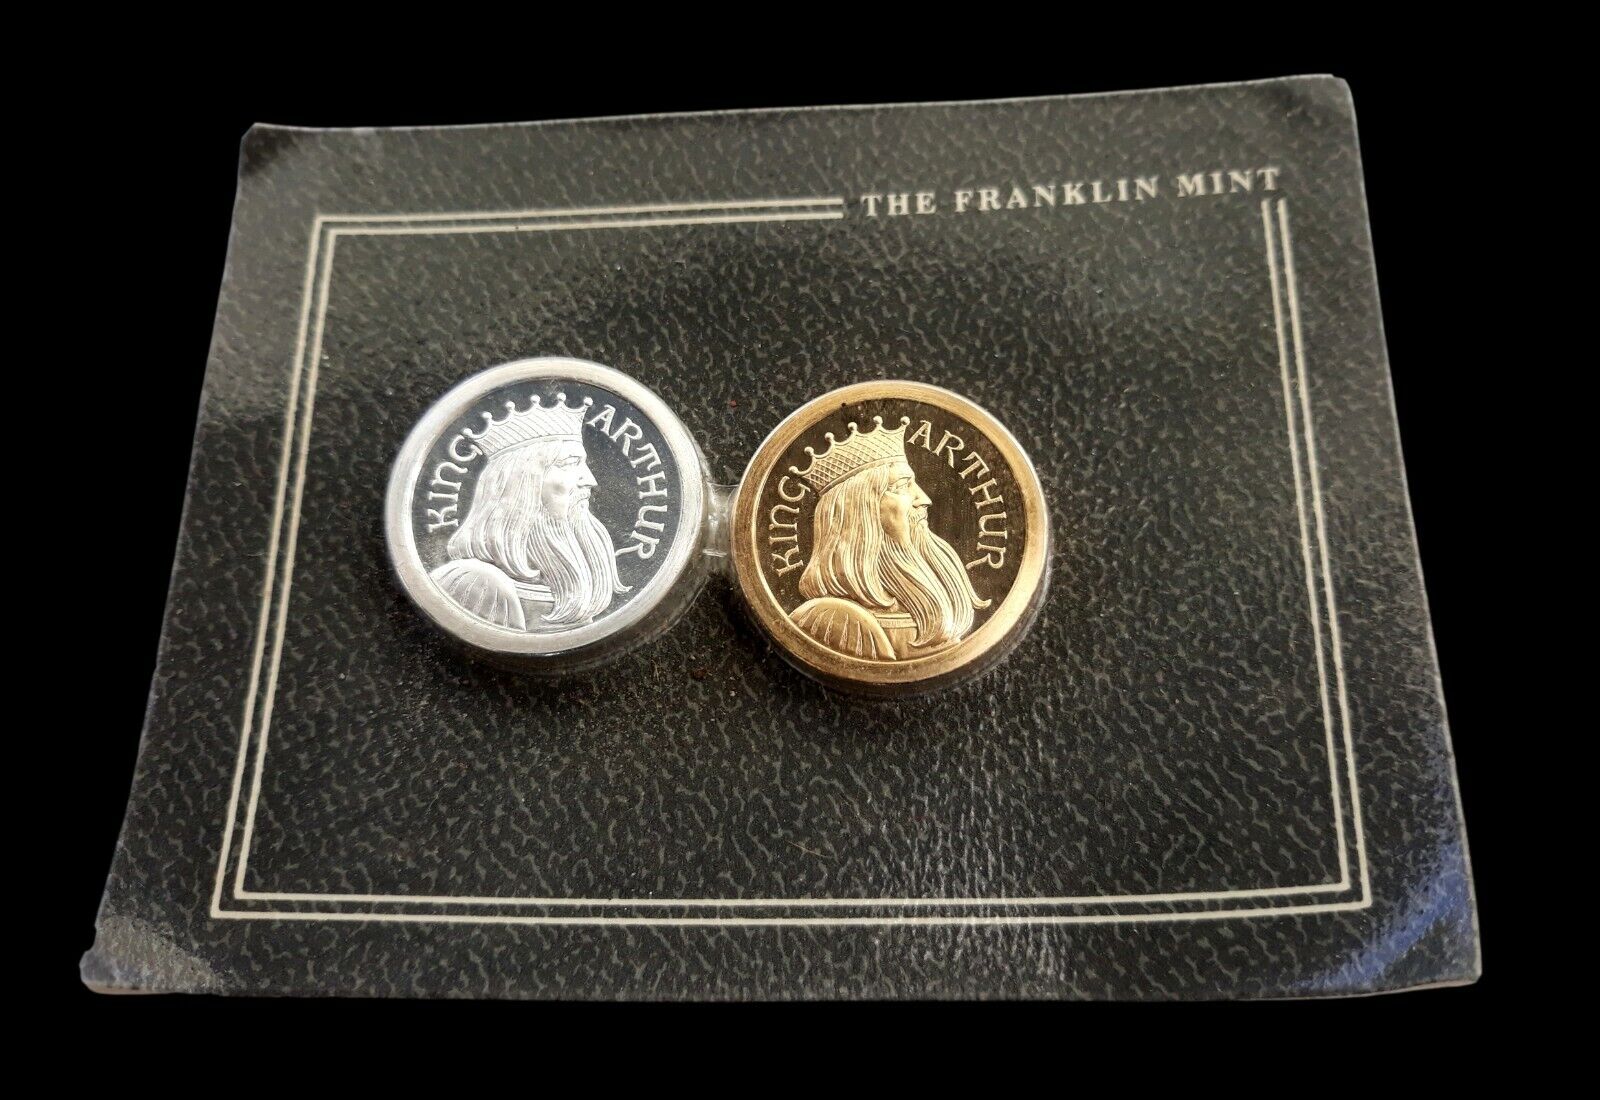 1983 - The Franklin Mint - KING ARTHUR Game Coins - Still Sealed - RARE